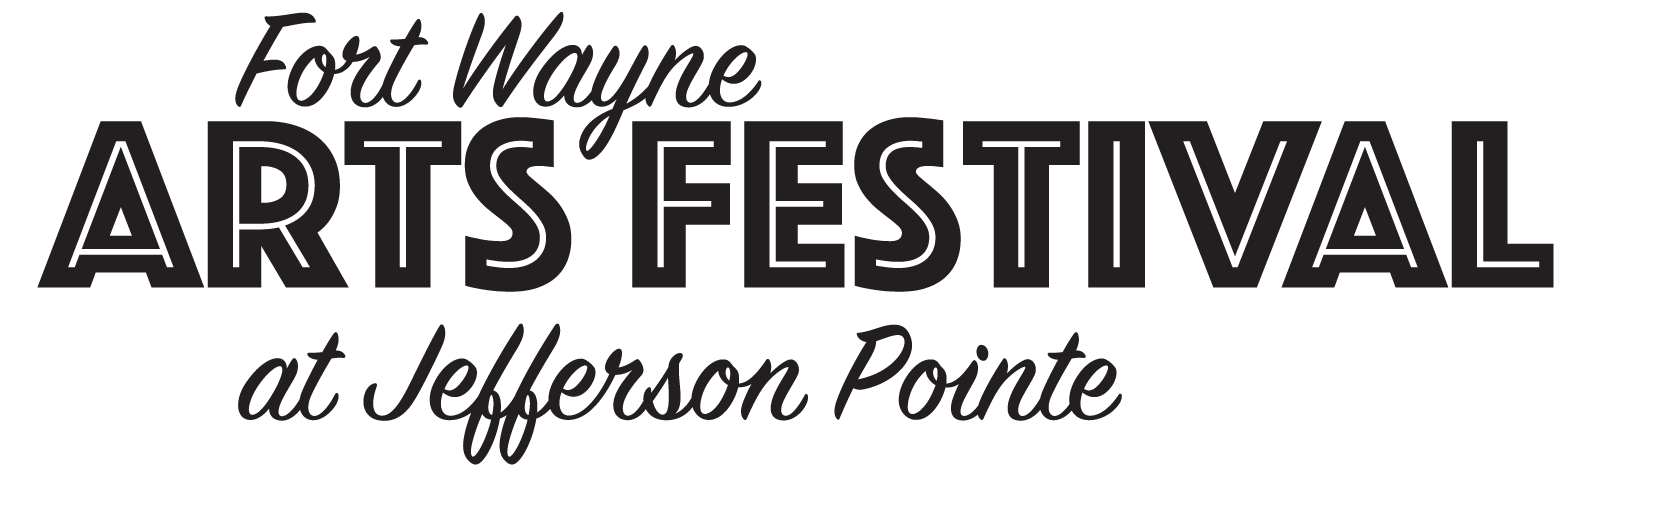 Fort Wayne Arts Festival Featured Artist Application